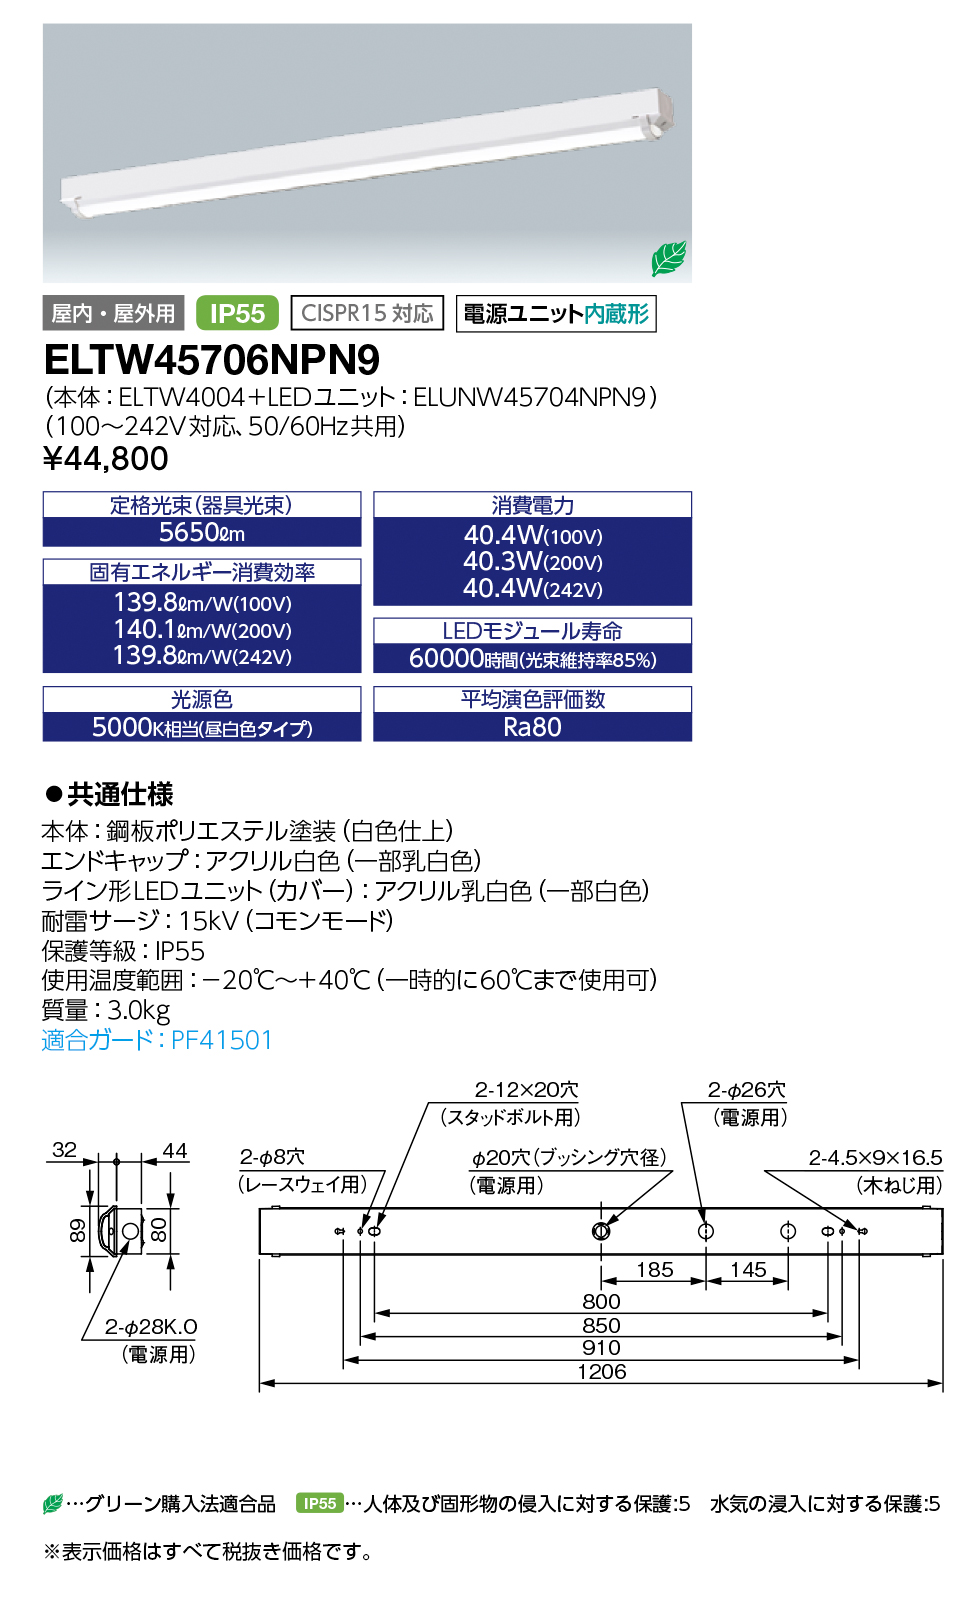 ELTW45706NPN9